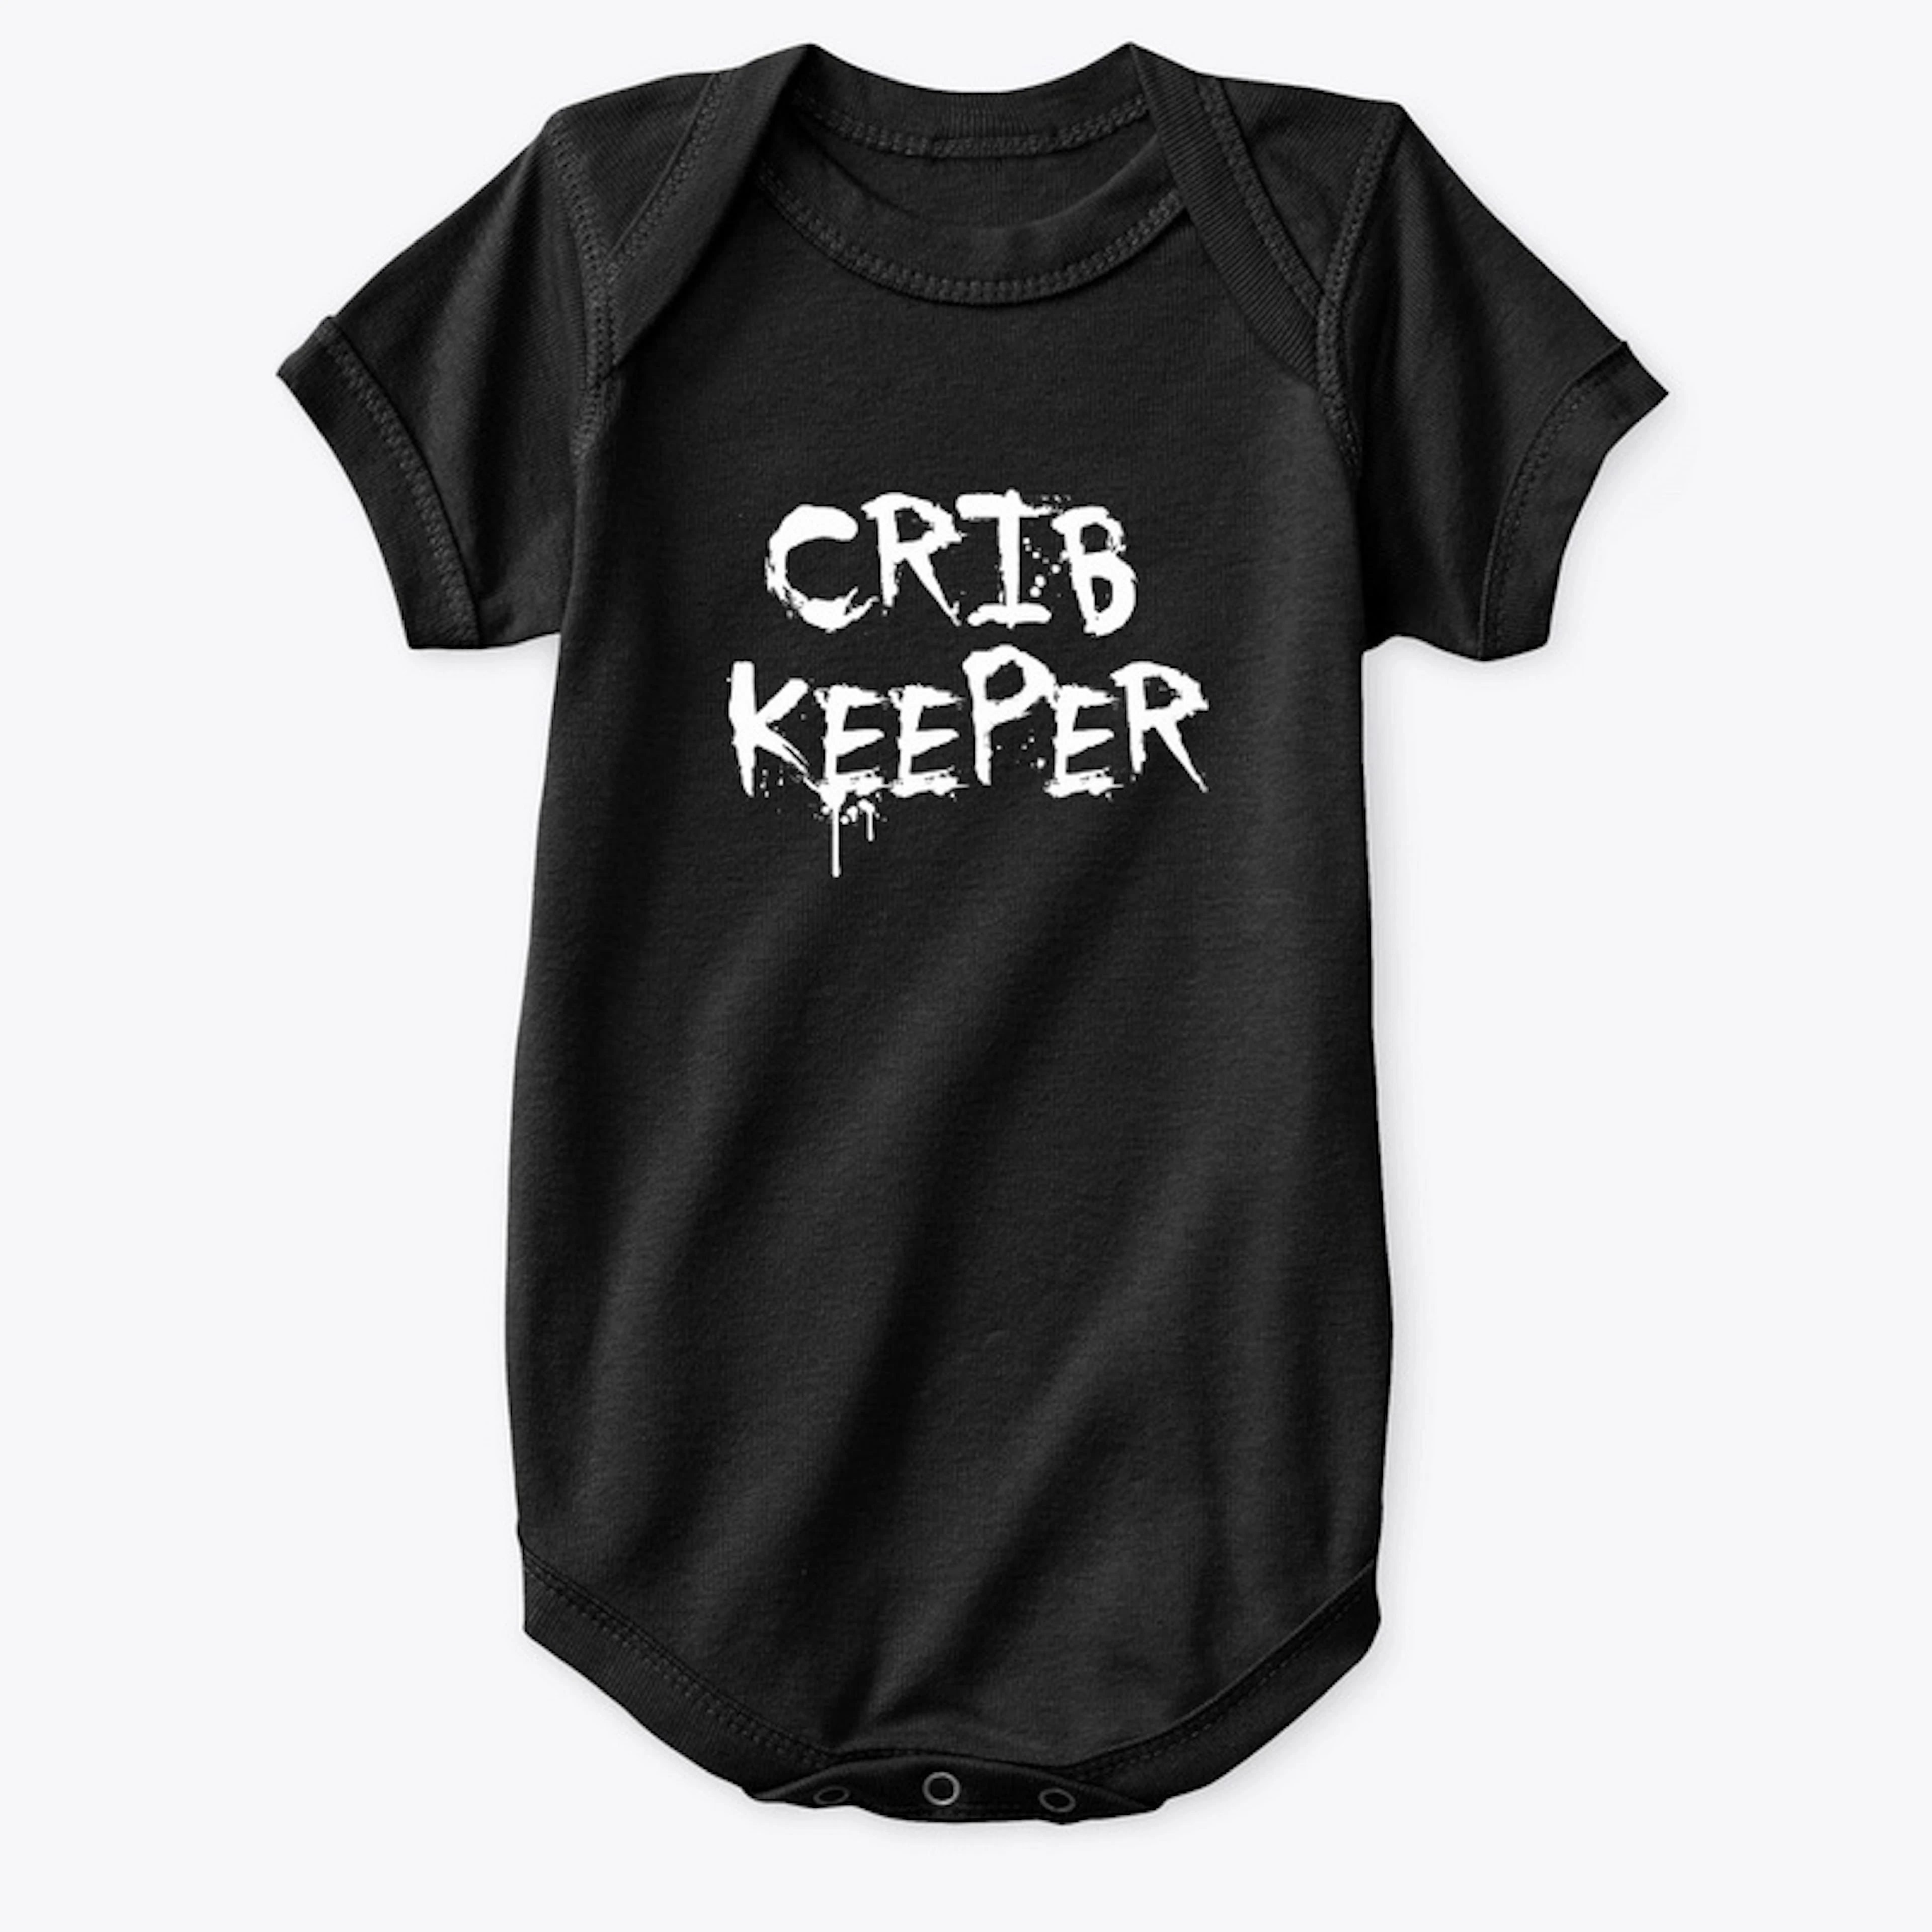 "Crib" Keeper Baby Onesie